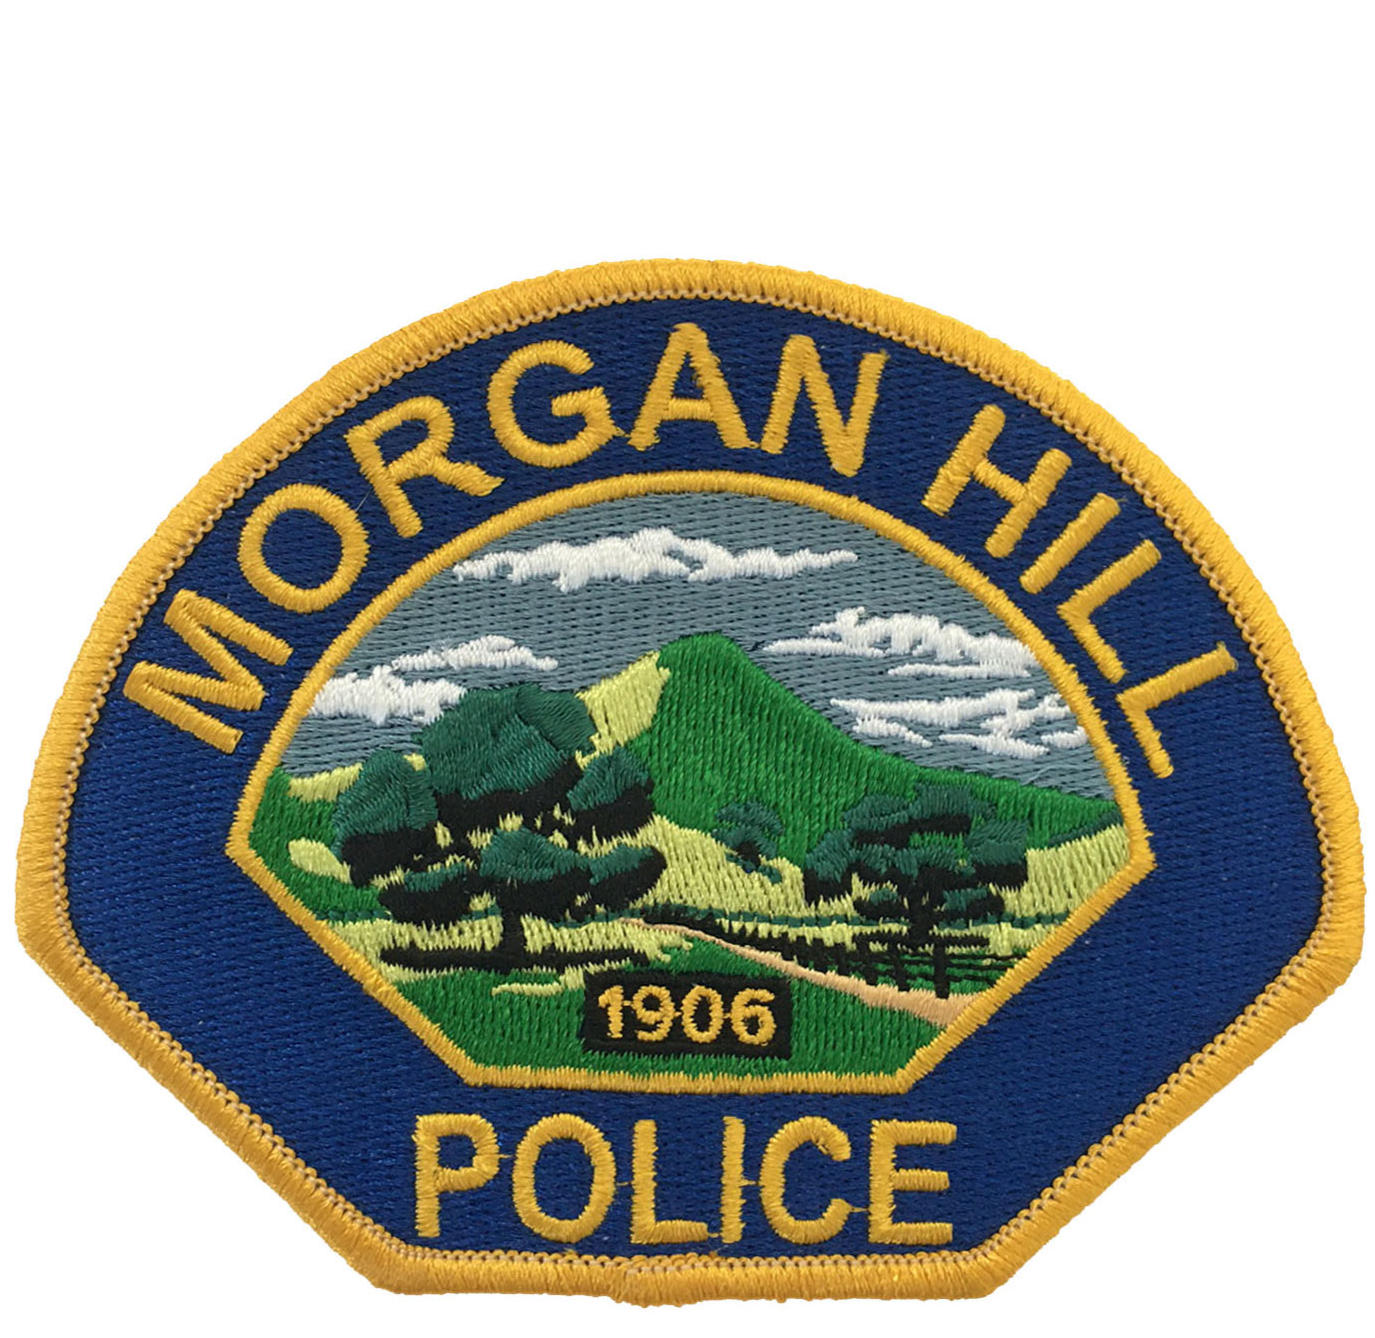 Morgan Hill, California, Police Department (Lead Image)